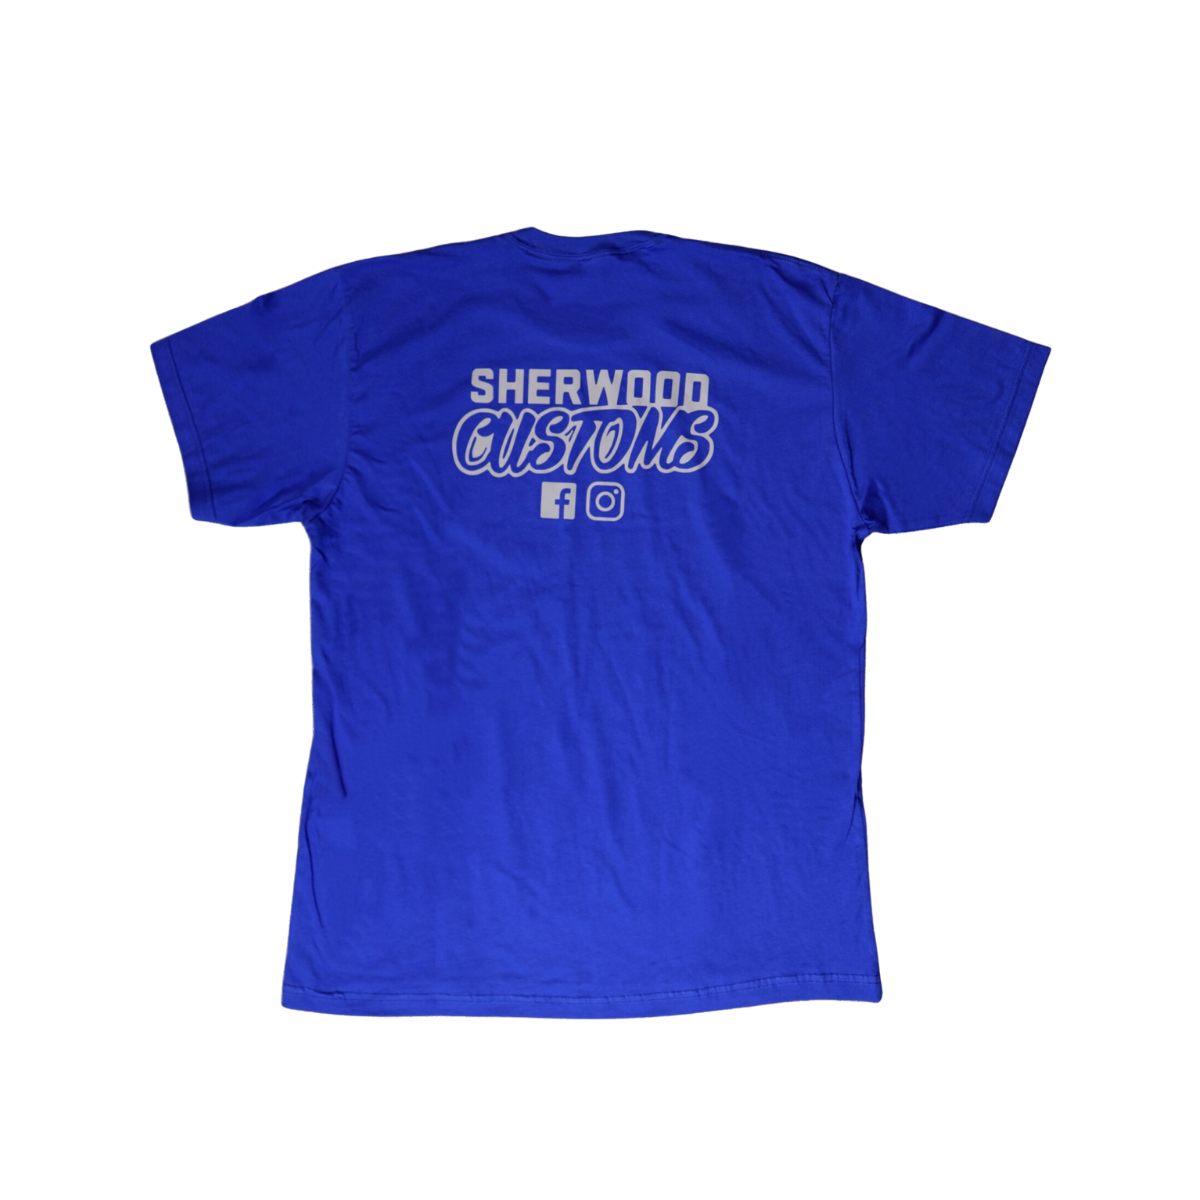 Sherwood Customs Royal Blue with White Logo T-Shirt